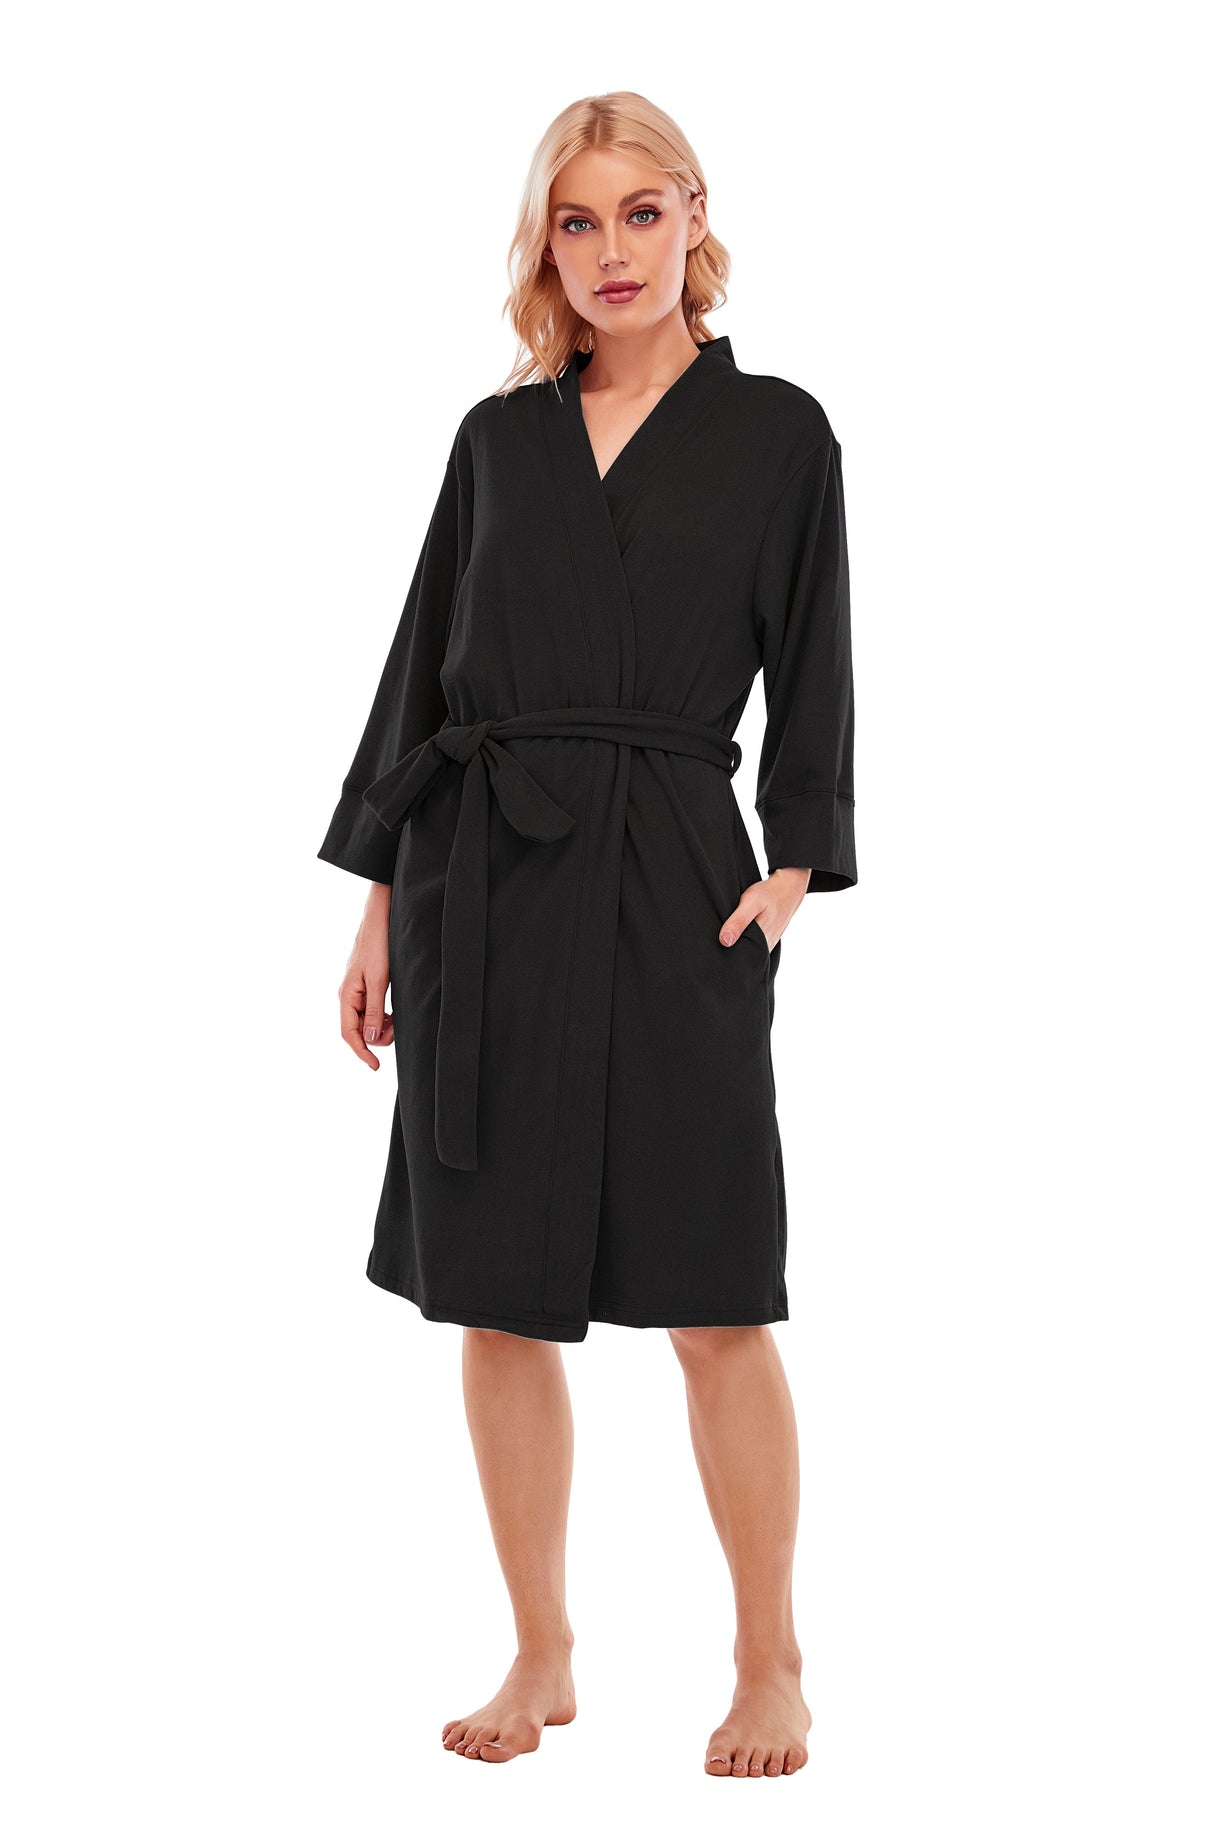 LUBOT Women's Robes Bathrobe Lightweight Microfleece Loungewear Black - GexWorldwide